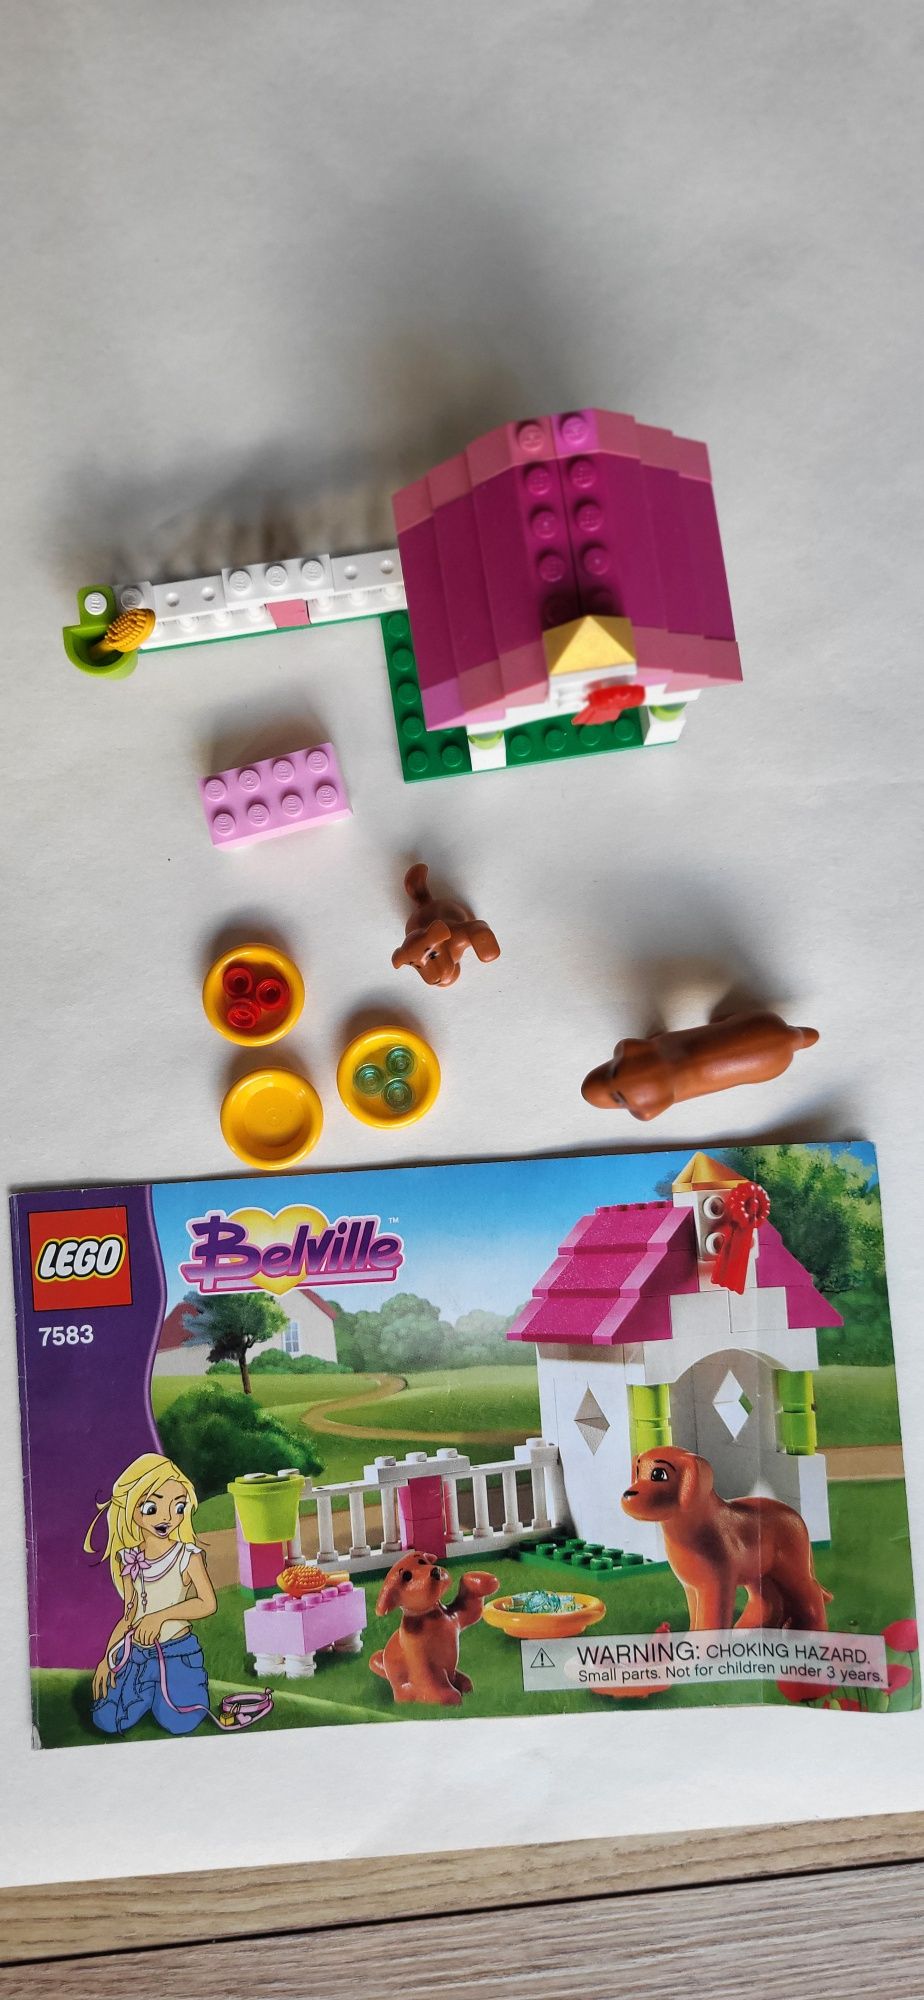 Lego 7583 Belville